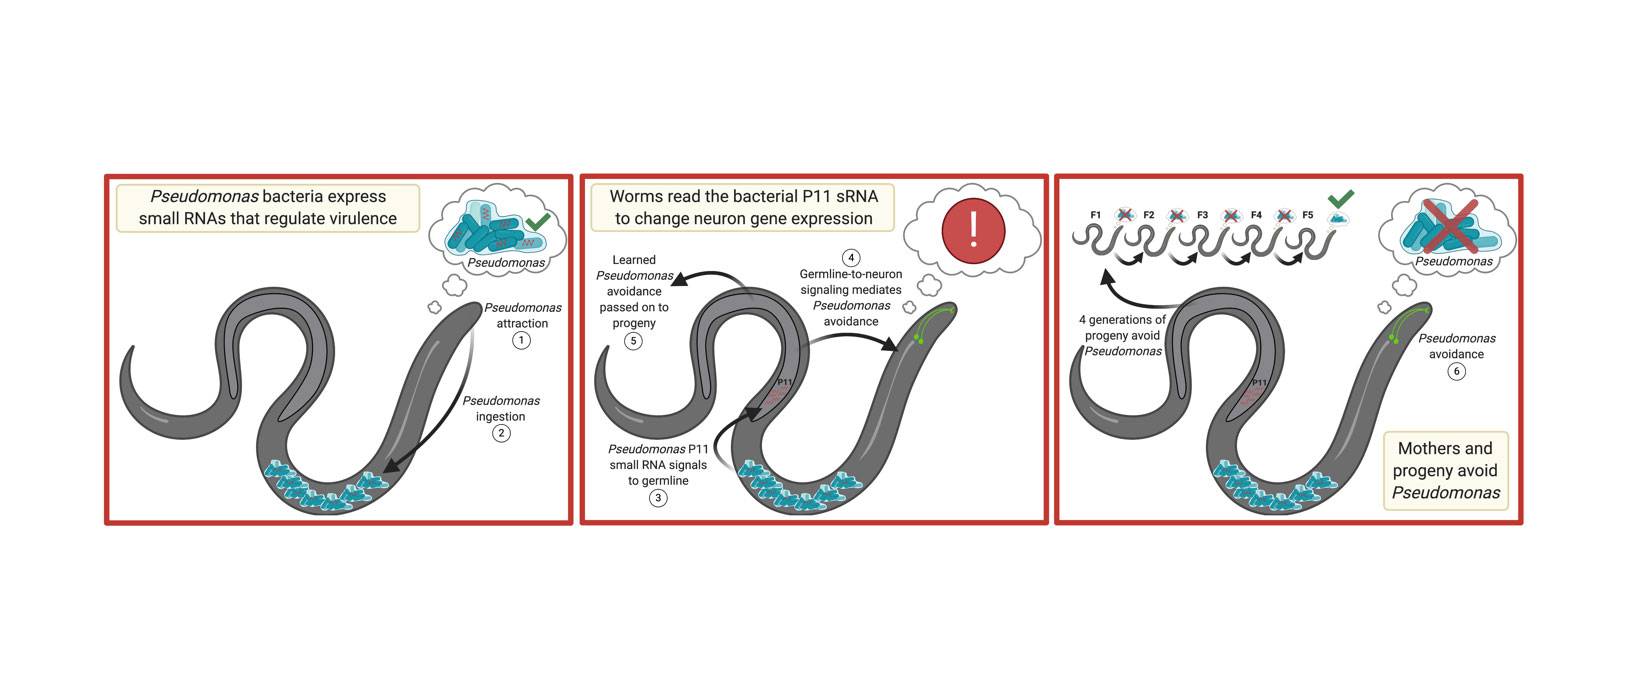 "Pseudomonas bacteria express small RNAs that regulate virulence" 1. "Pseudomonas attraction" 2. "Pseudomonas ingestion". "Worms read the bactertial P11 sRNA to change neuron gene expression." "Mothers and progeny avoid Pseudomonas"